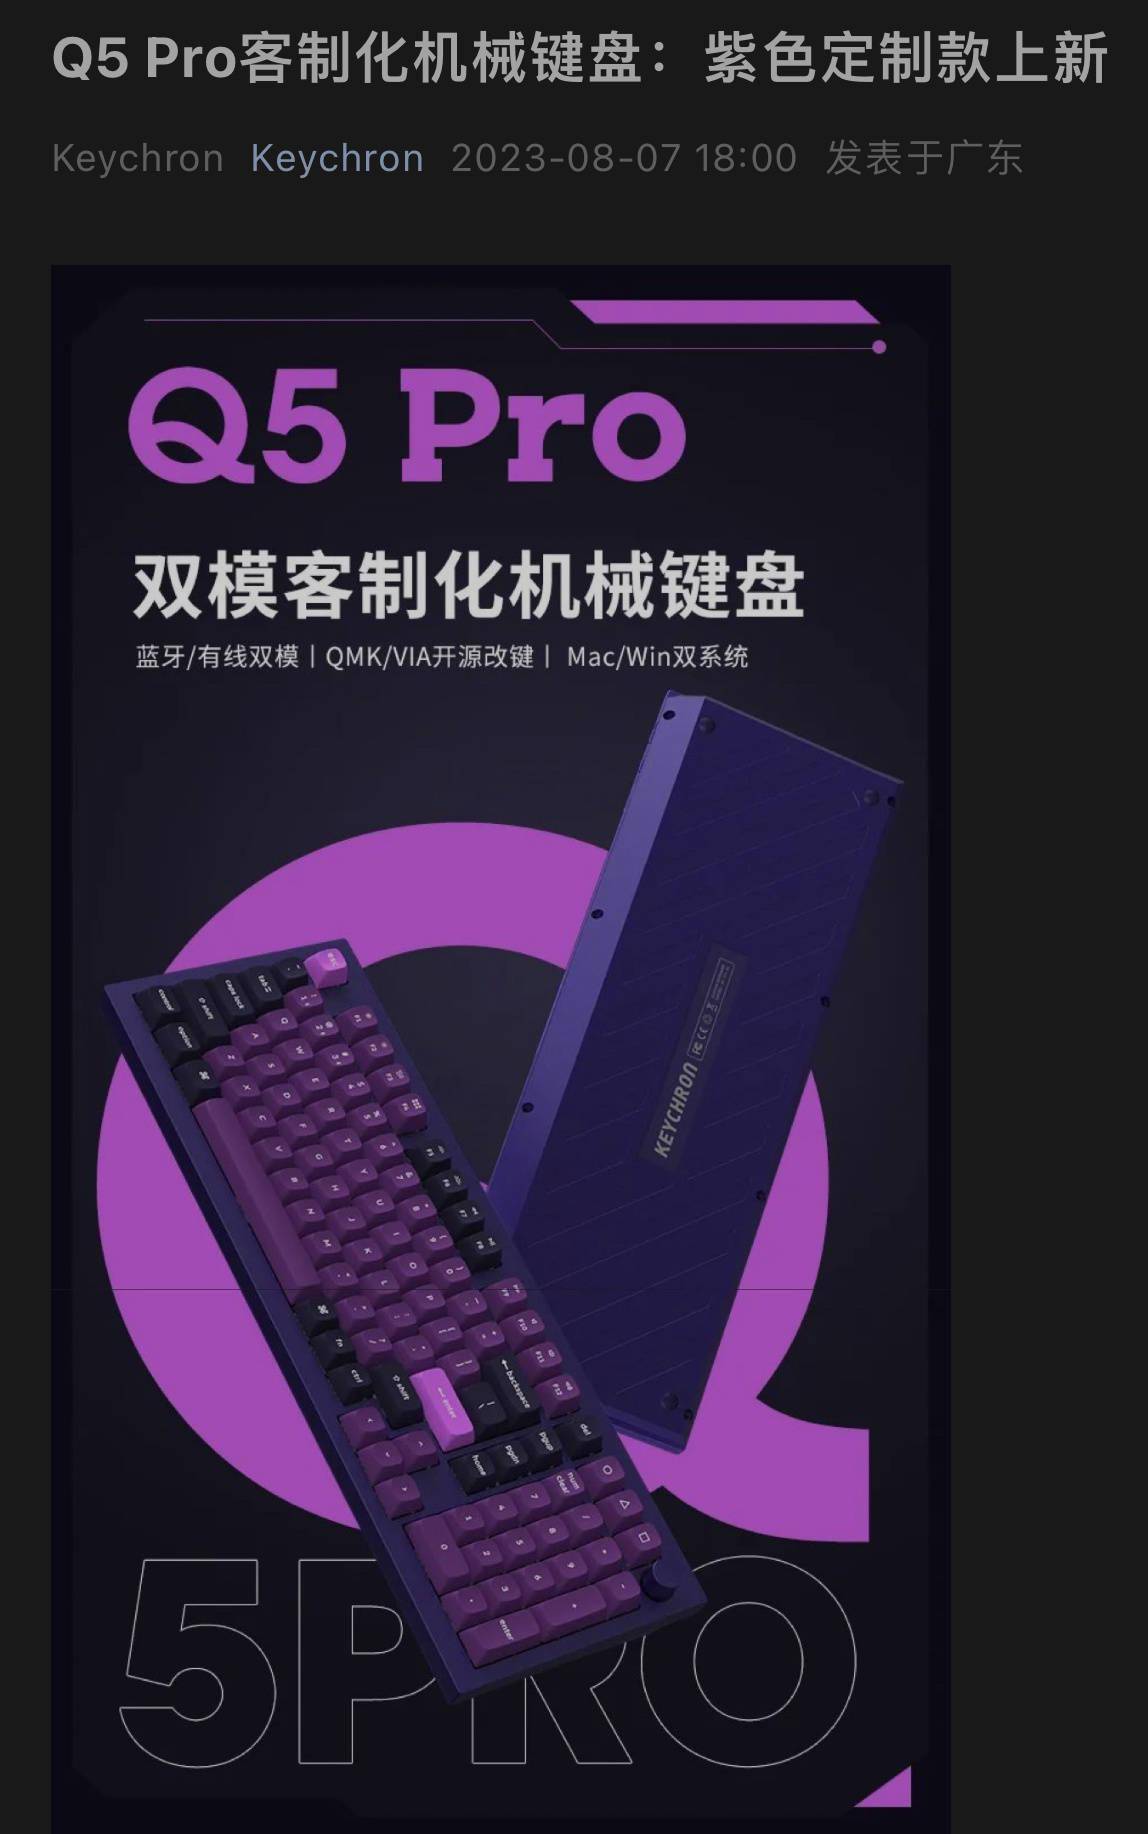 Keychron紫色版Q5 Pro机械键盘今日开售 支持蓝牙5.1和Type-C有线双模连接